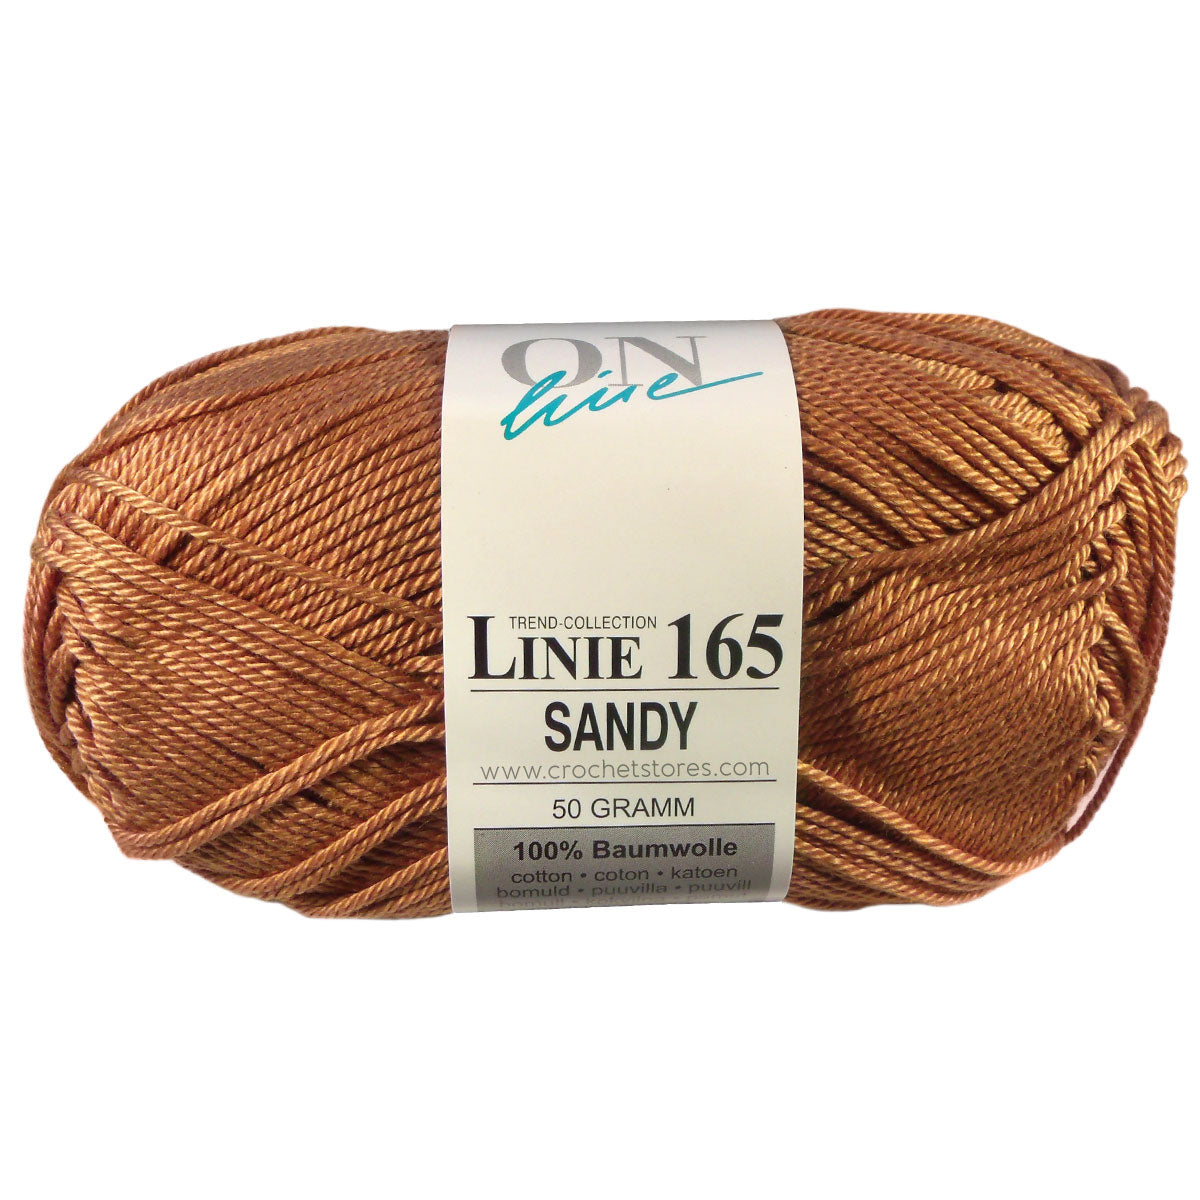 SANDY - Crochetstores110165-00824014366136026